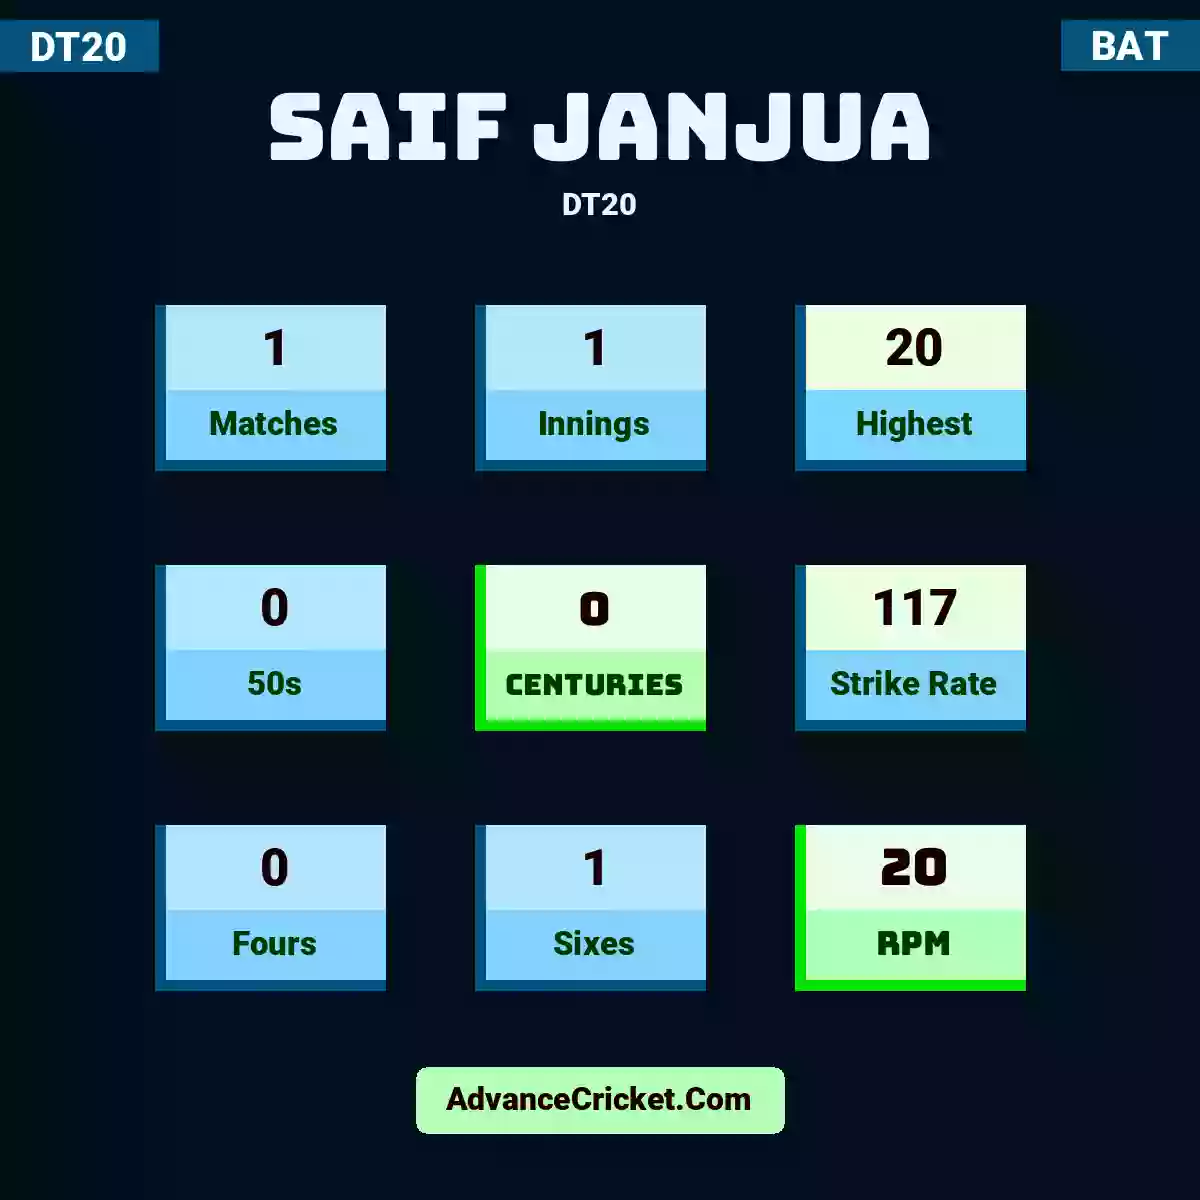 Saif Janjua DT20 , Saif Janjua played 1 matches, scored 20 runs as highest, 0 half-centuries, and 0 centuries, with a strike rate of 117. S.Janjua hit 0 fours and 1 sixes, with an RPM of 20.